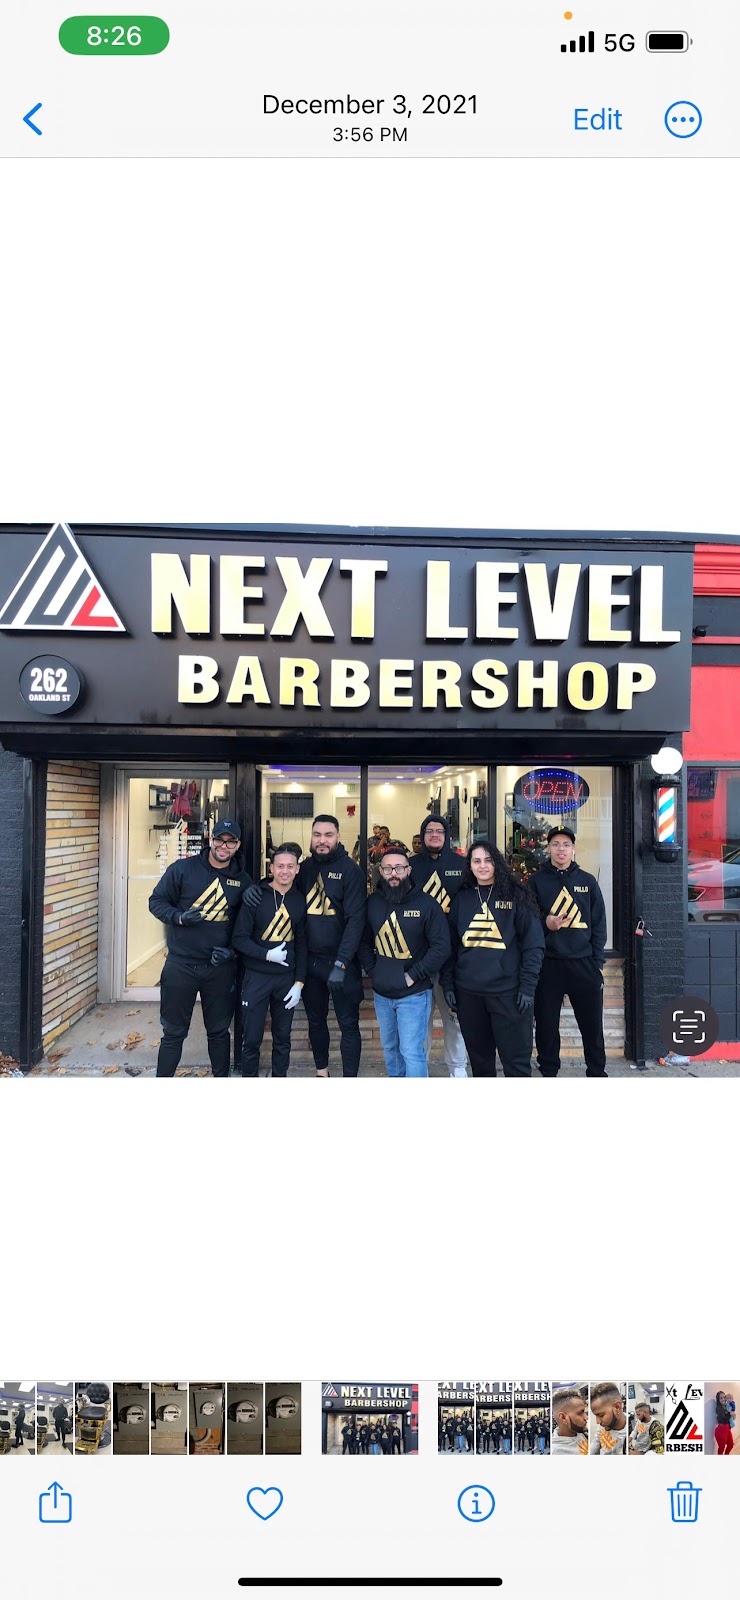 Next level barbershop | 262 Oakland St, Springfield, MA 01108 | Phone: (646) 940-2840